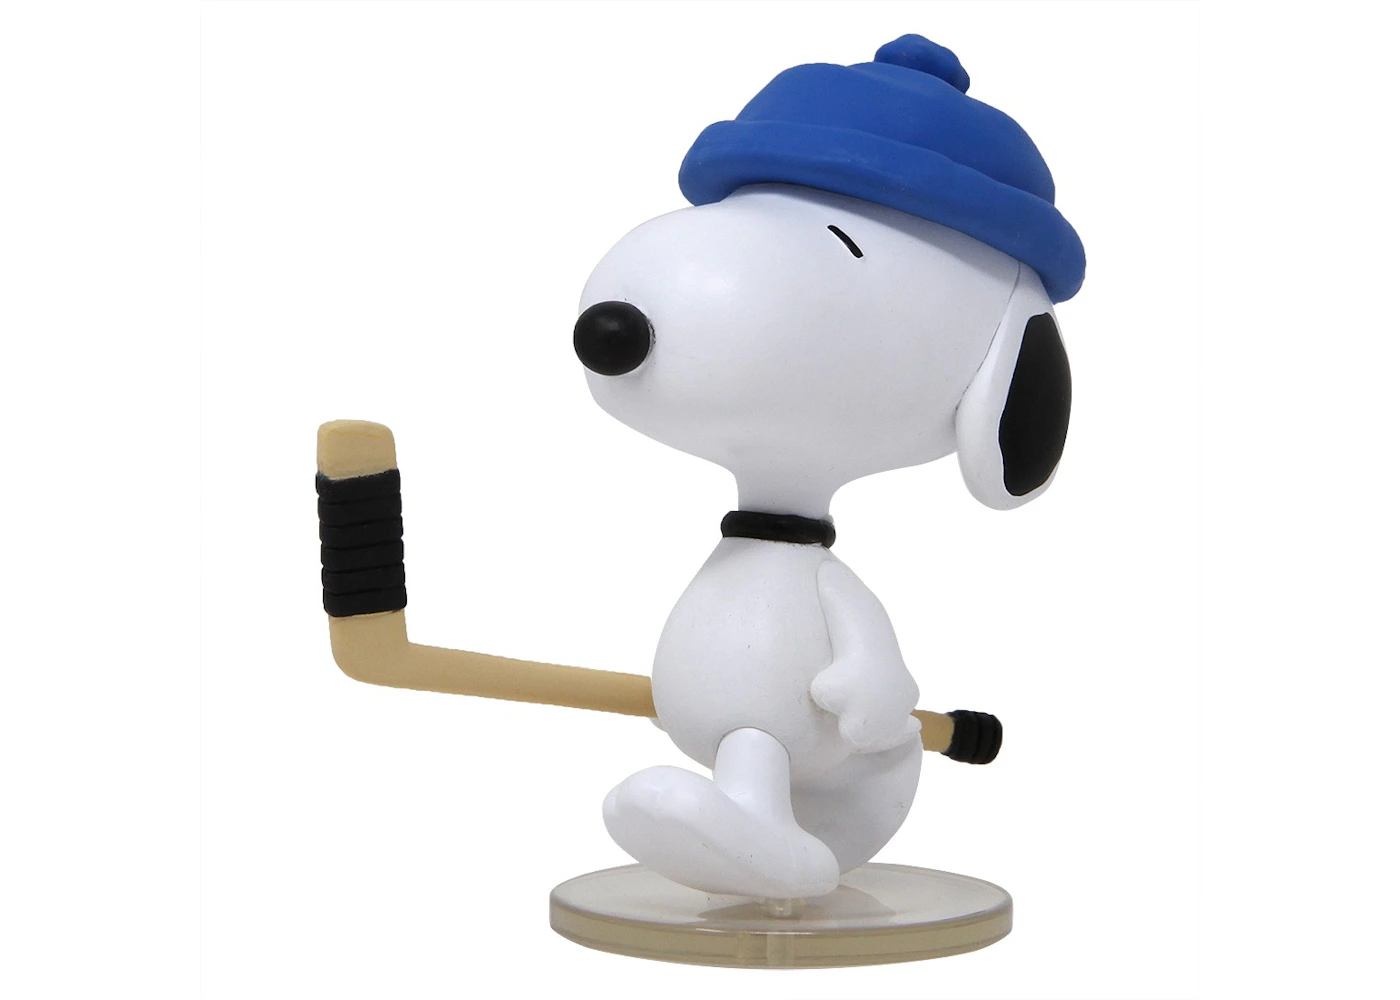 Medicom UDF Peanuts Series 11 Film Director Snoopy Figure (white)